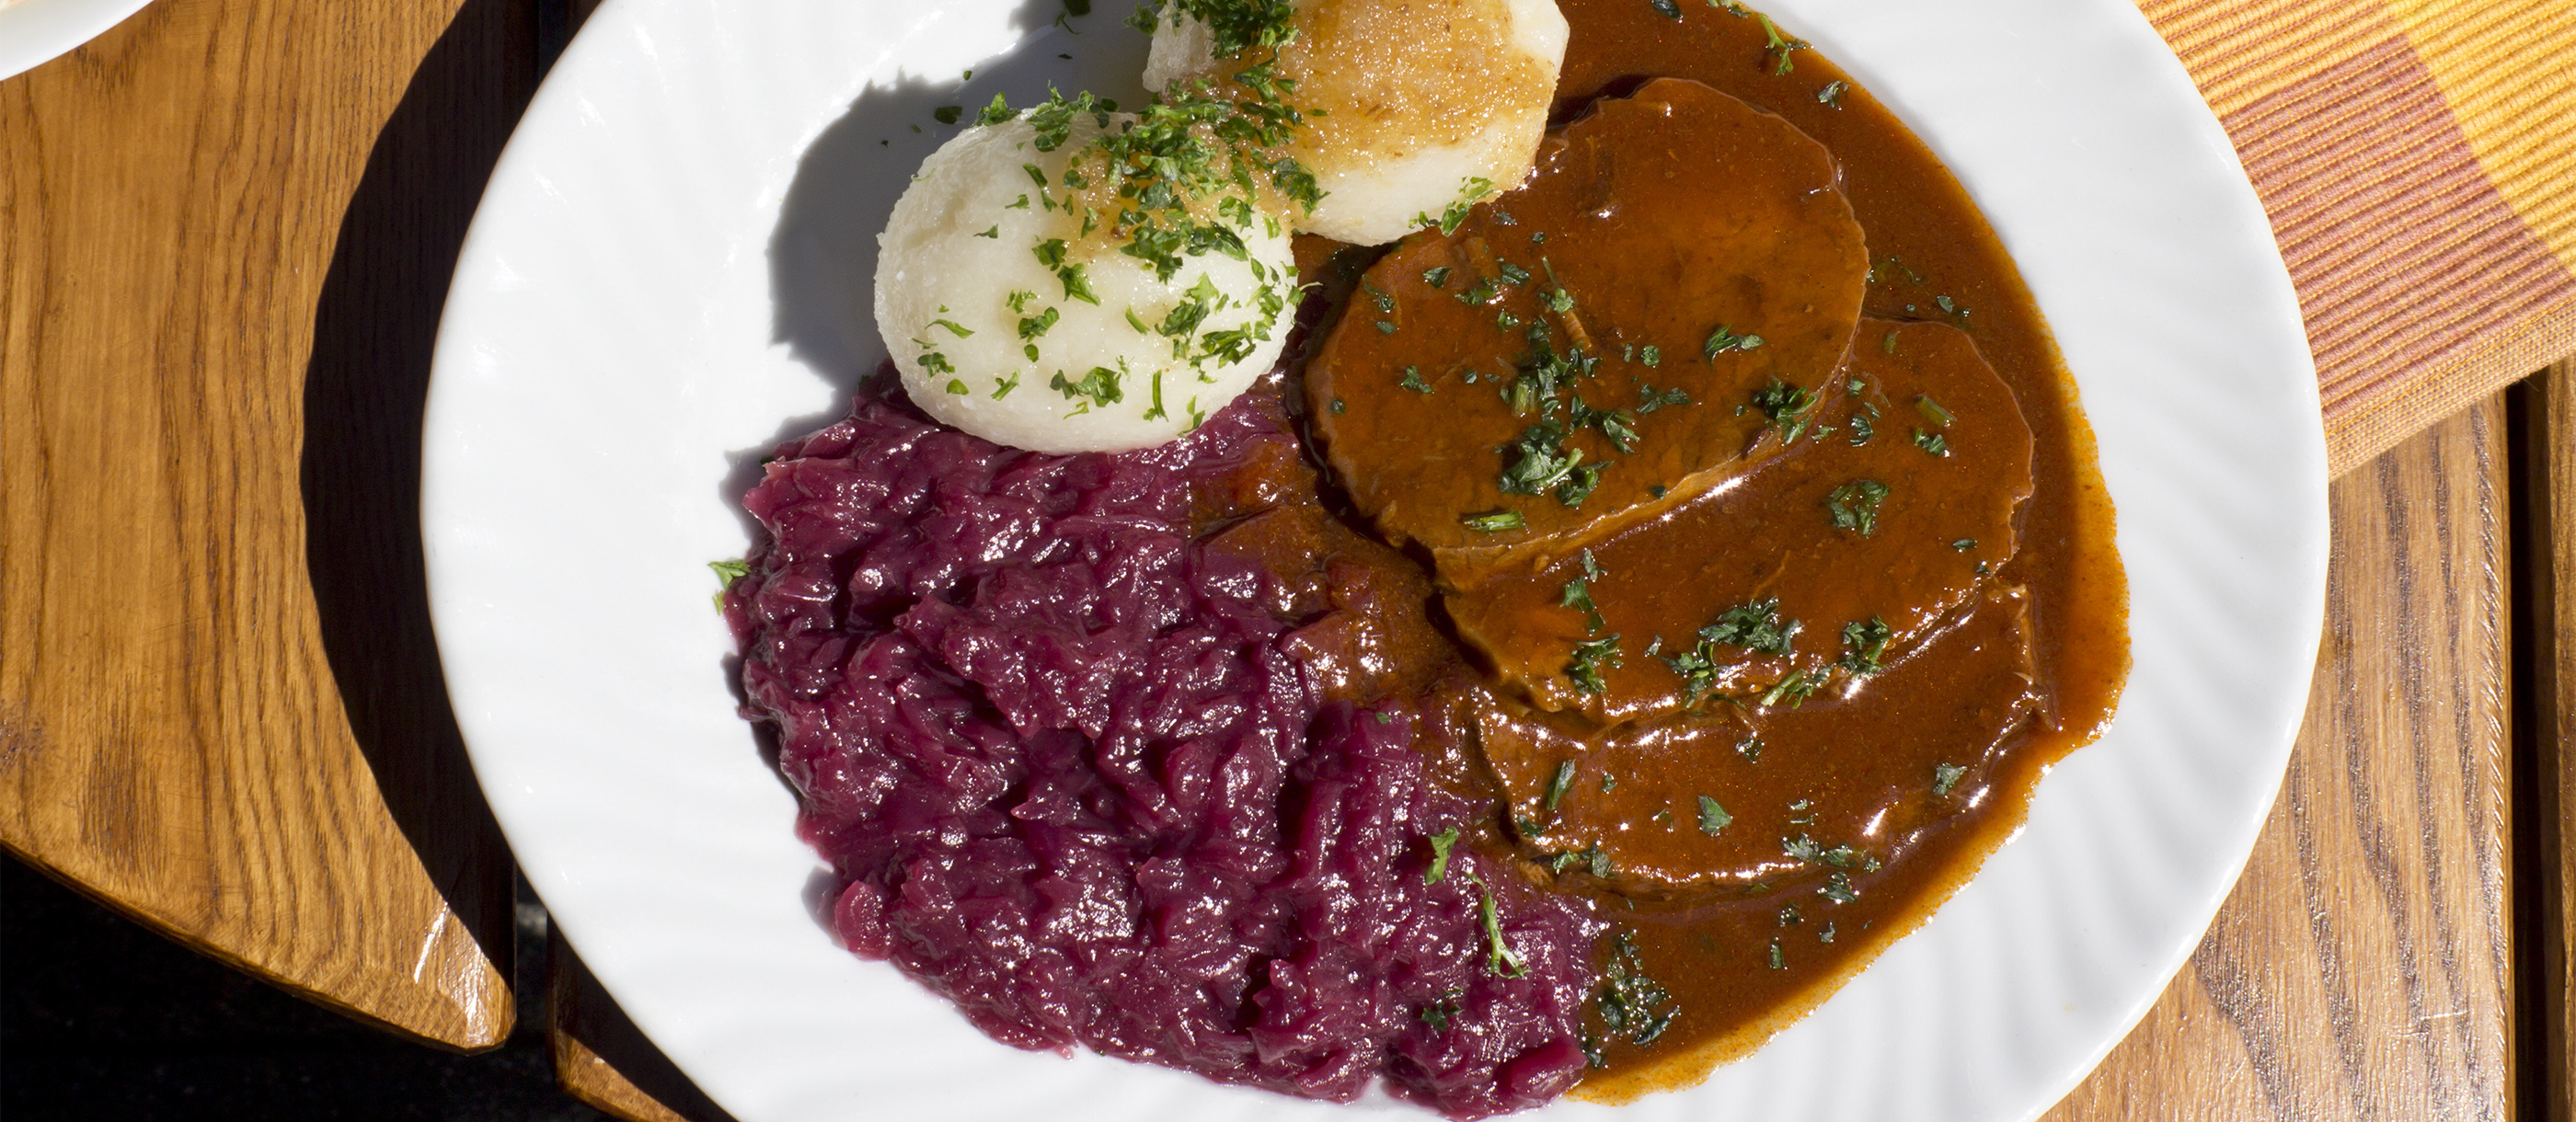 recipes for sauerbraten